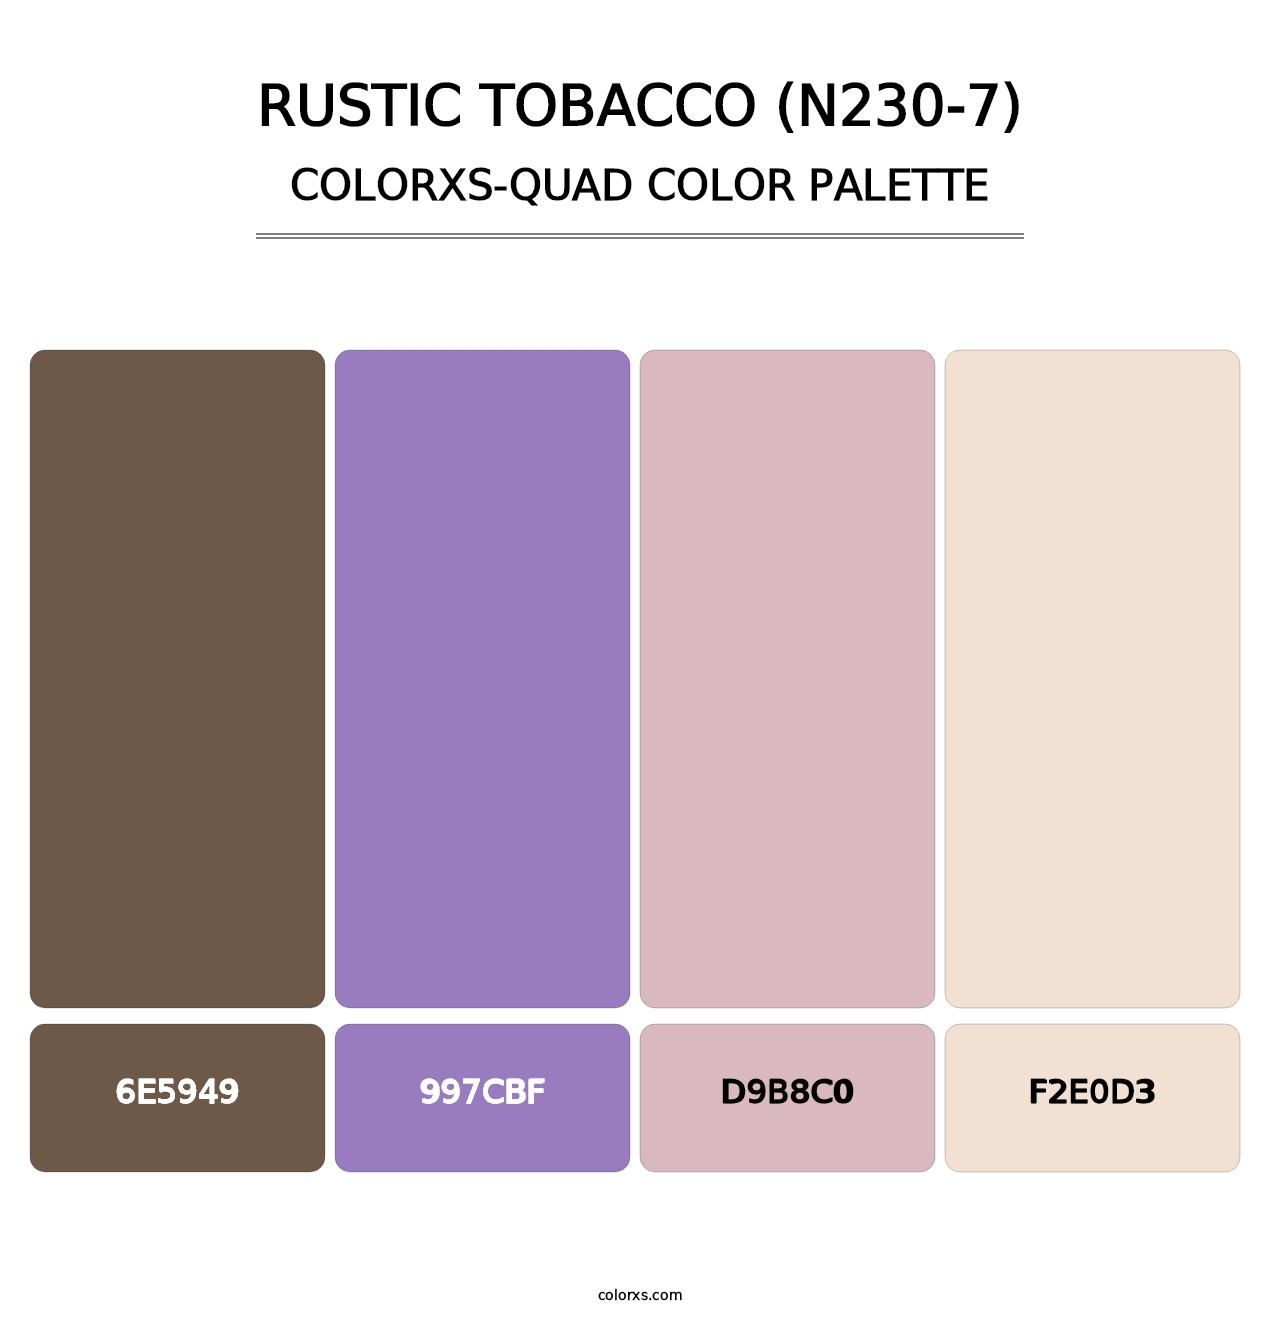 Rustic Tobacco (N230-7) - Colorxs Quad Palette